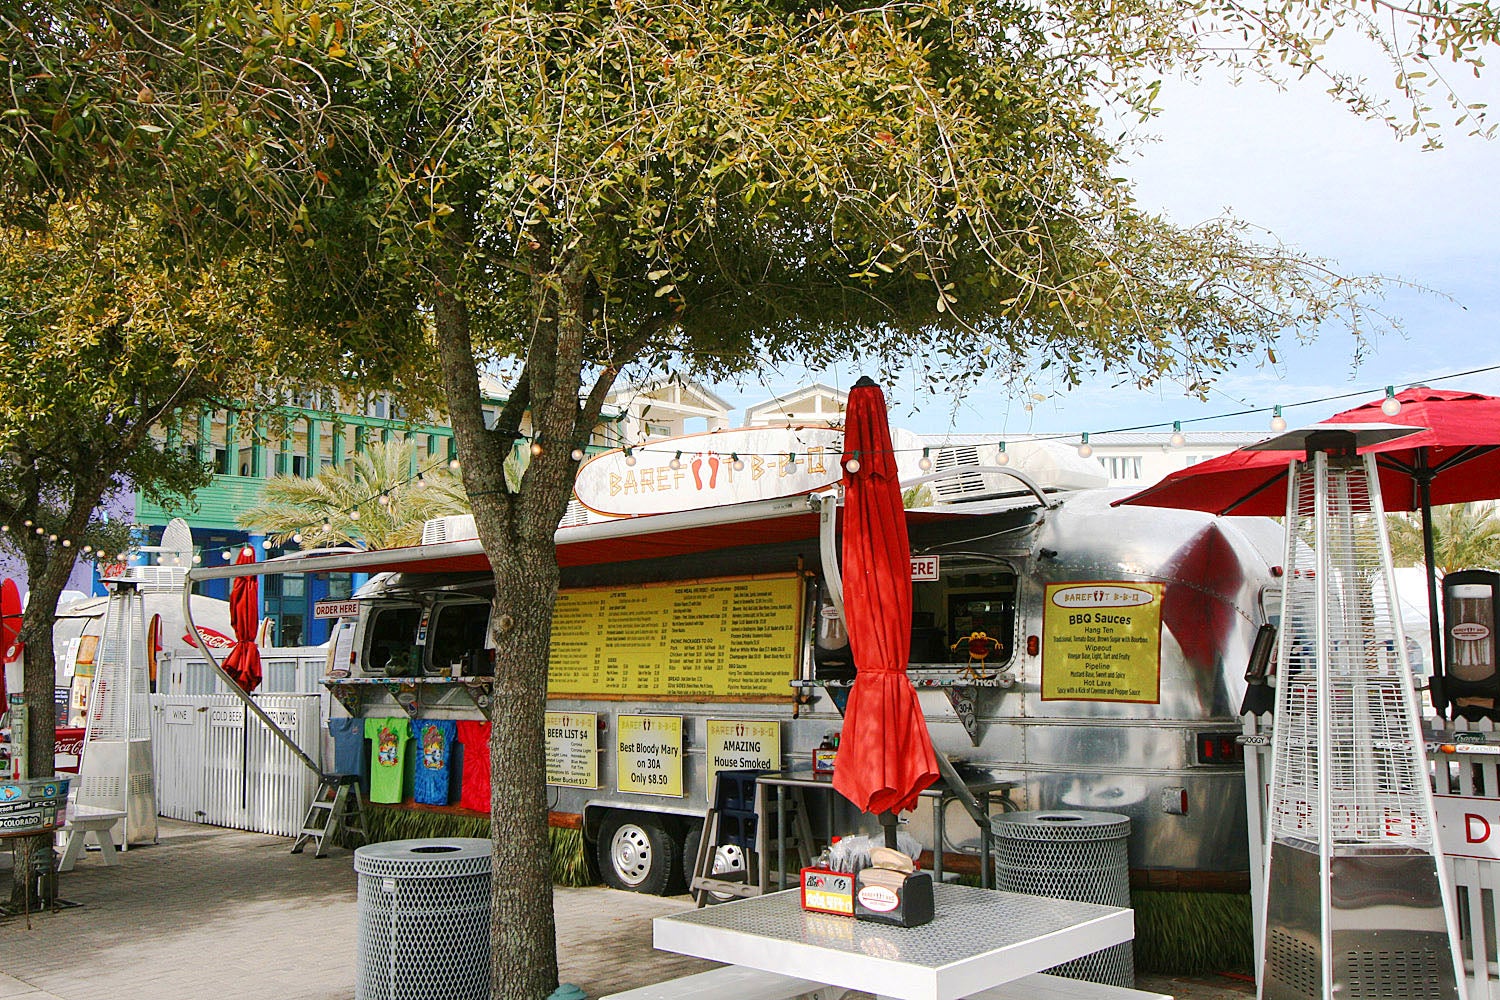 Food Trucks in Seaside